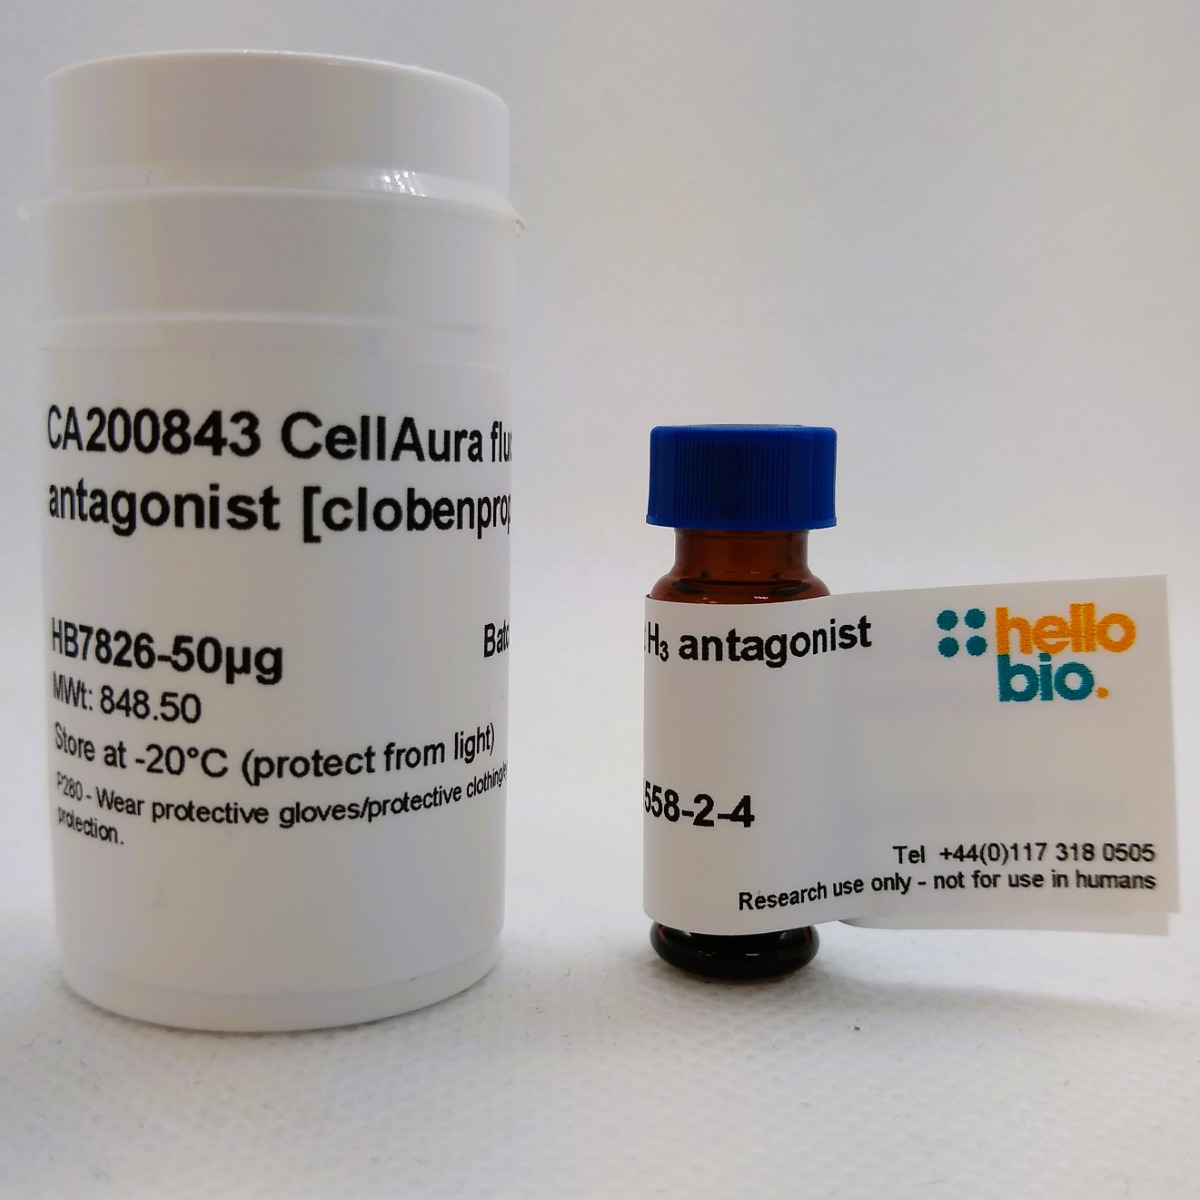 CellAura fluorescent H3 antagonist [clobenpropit] product vial image | Hello Bio